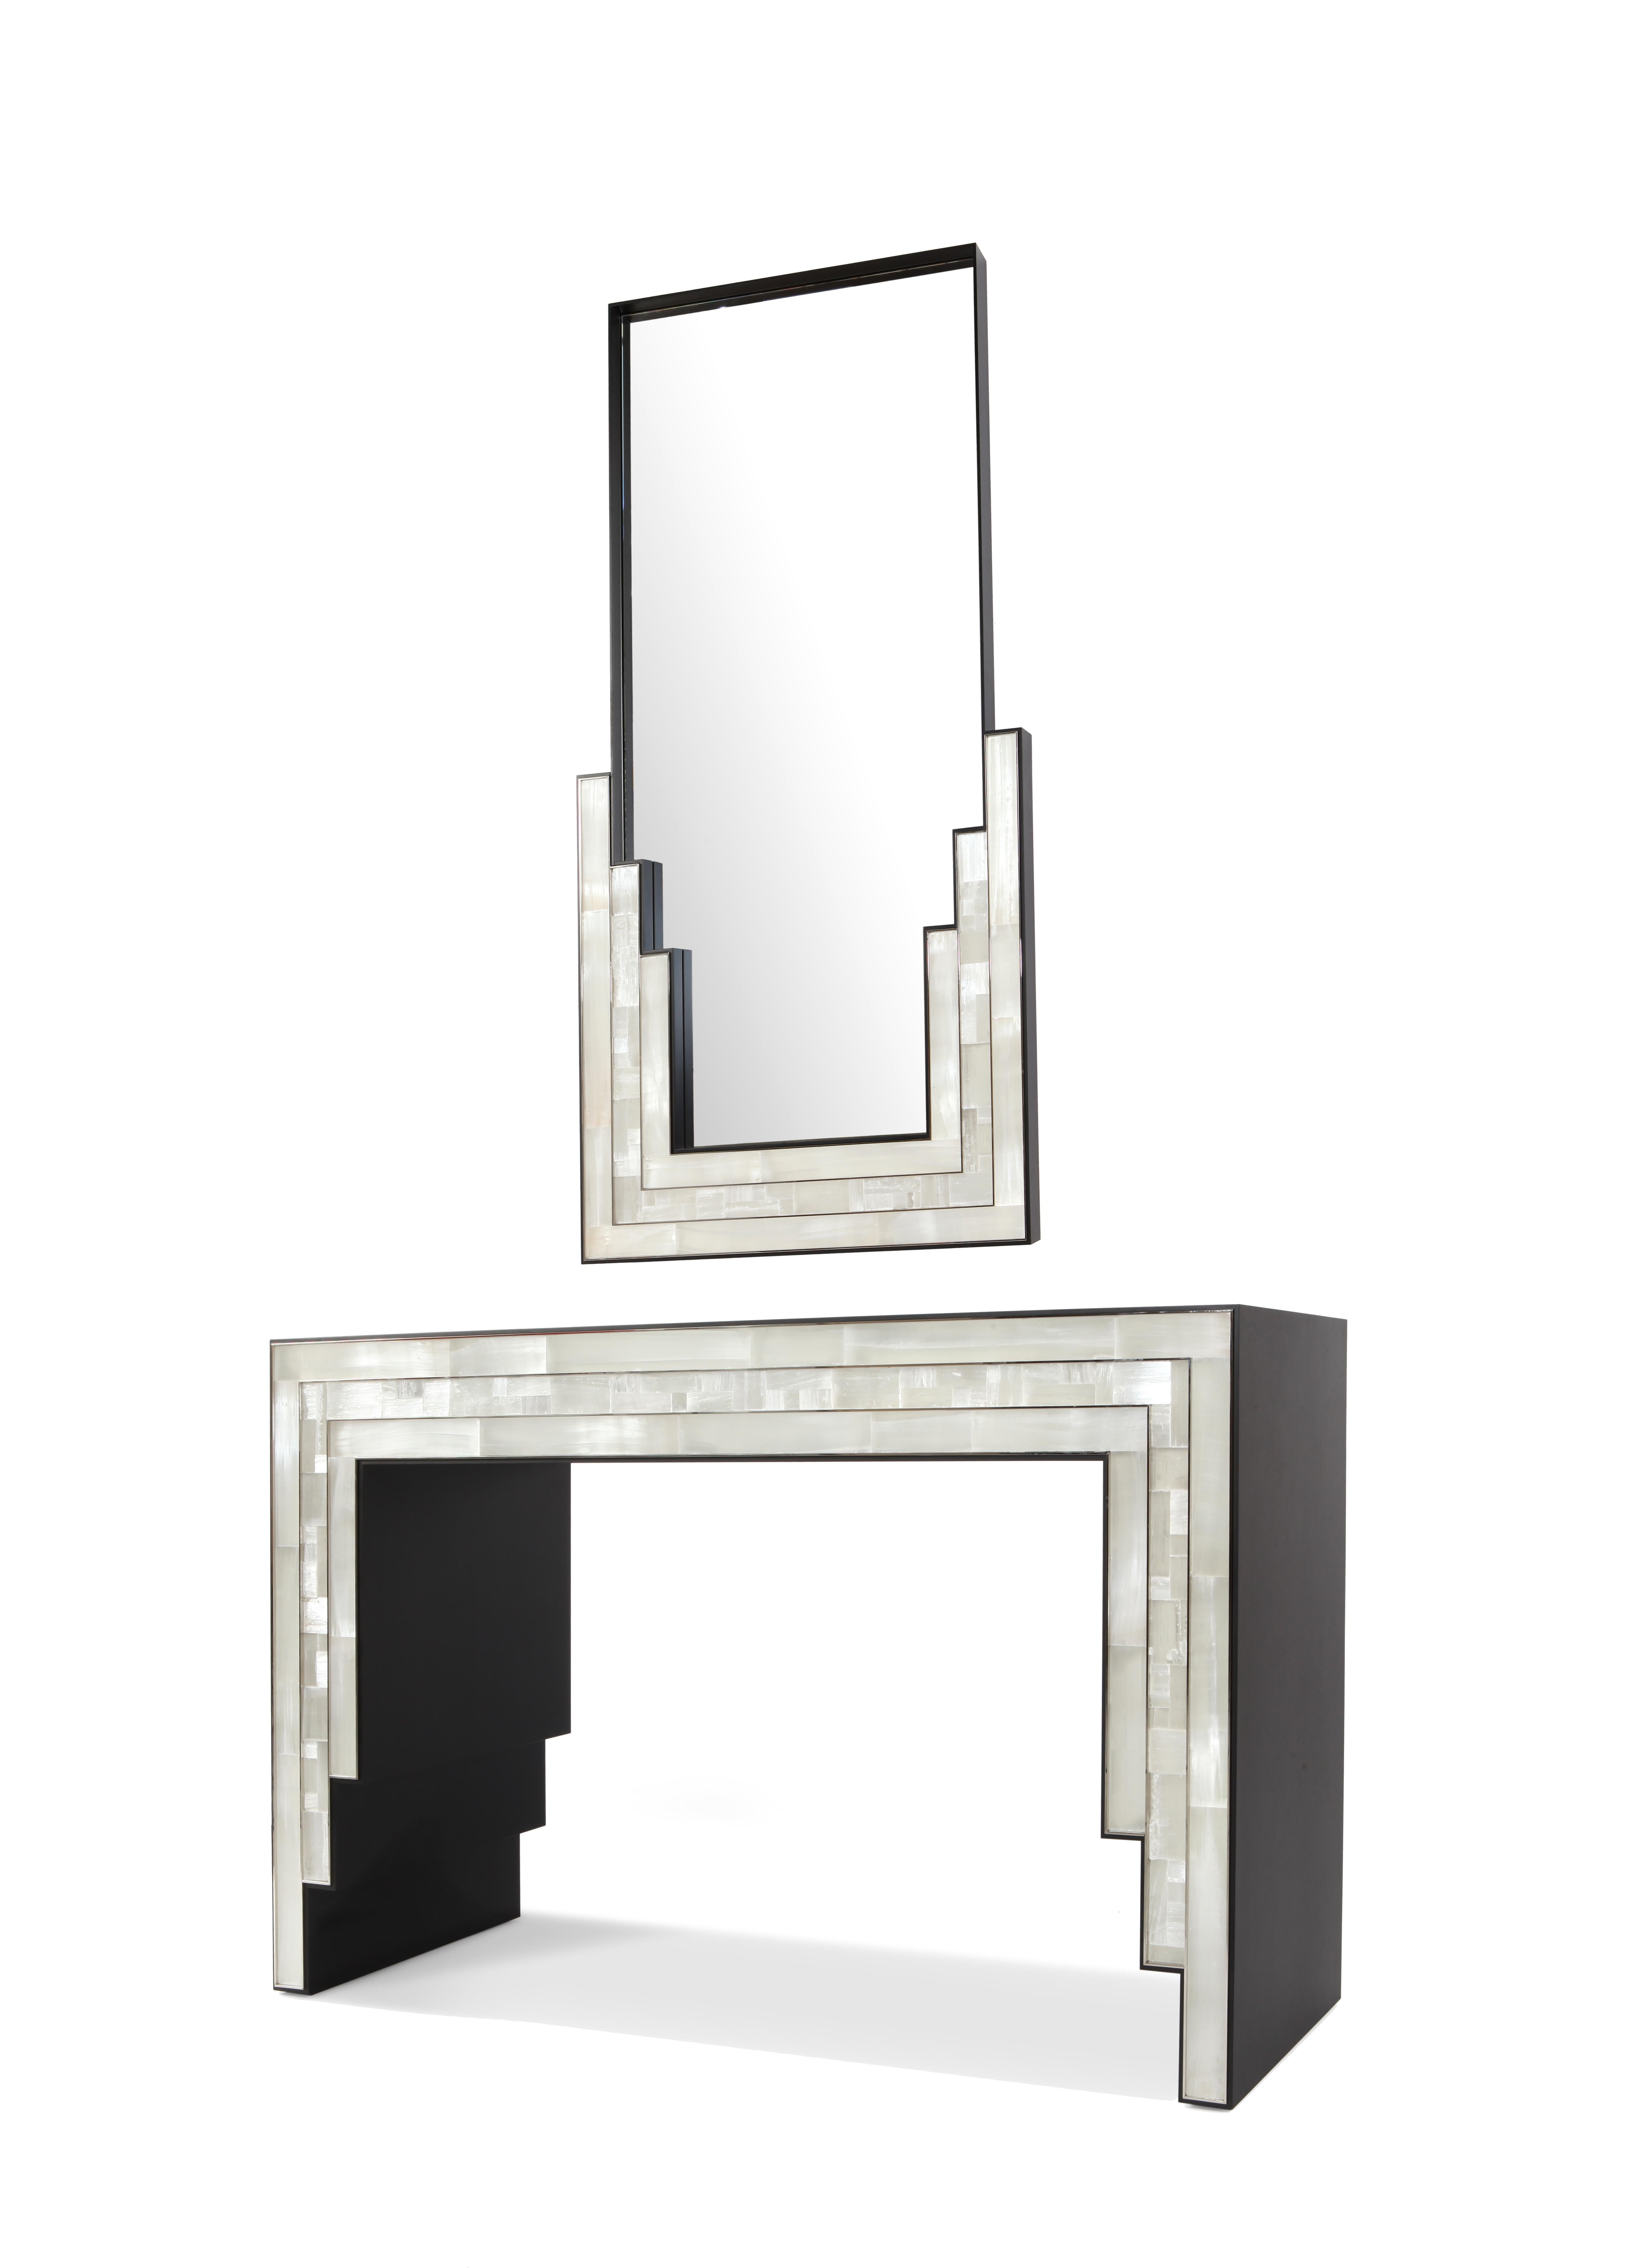 Escalier Mirror with selenite, Wooden Veneer and Nickel Detailing For Sale 4